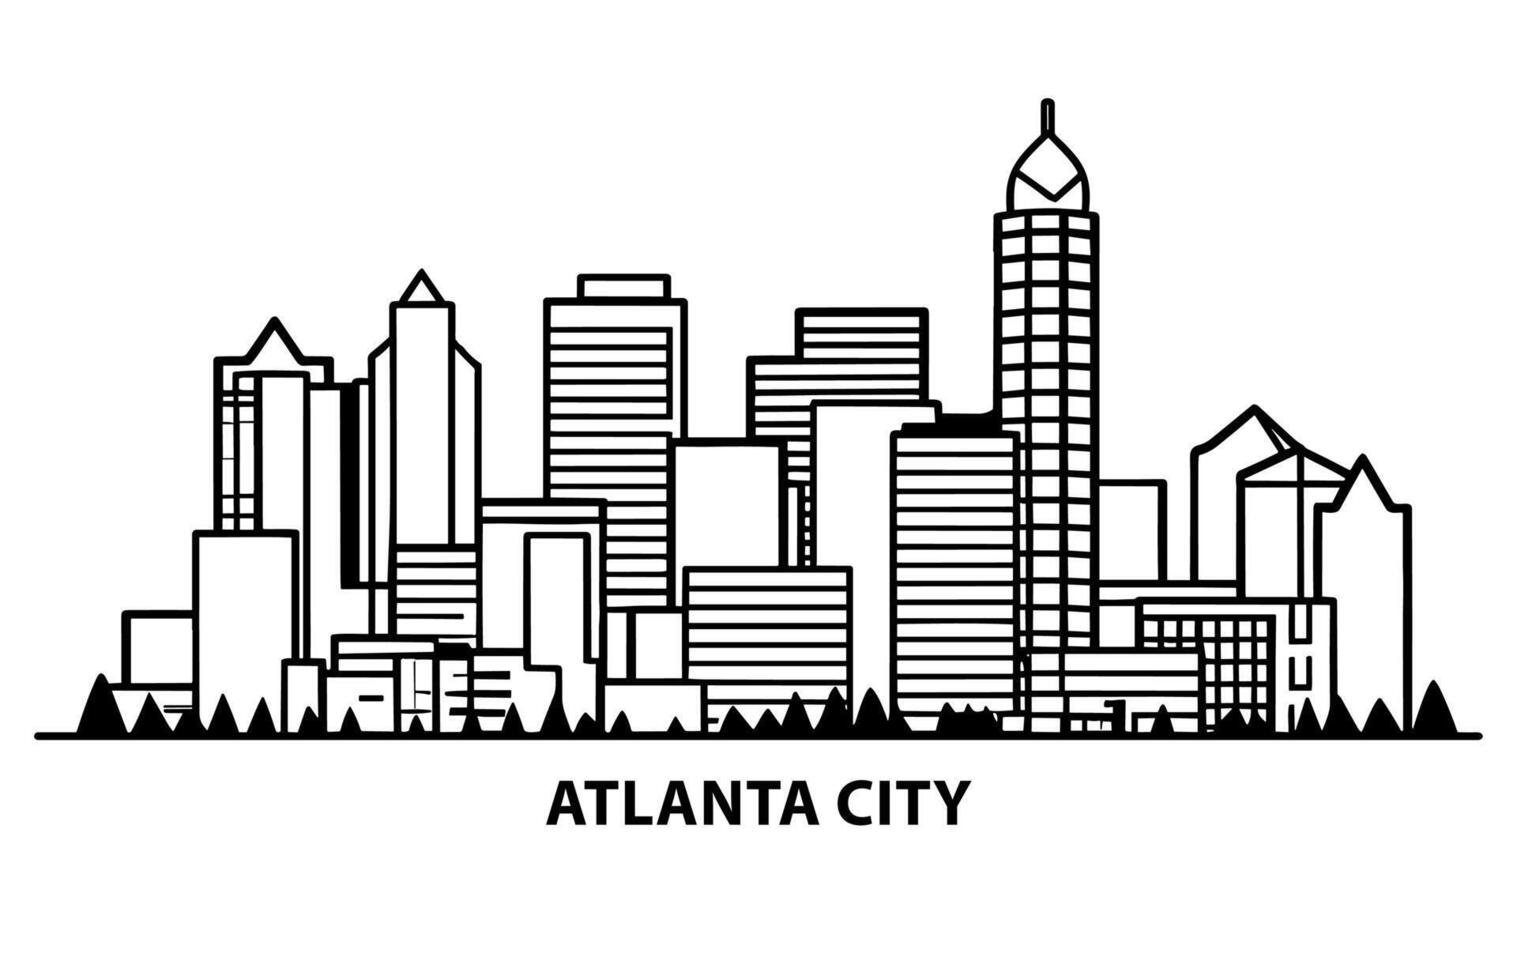 vlak vector illustratie van Atlanta stad, Atlanta stad horizon.